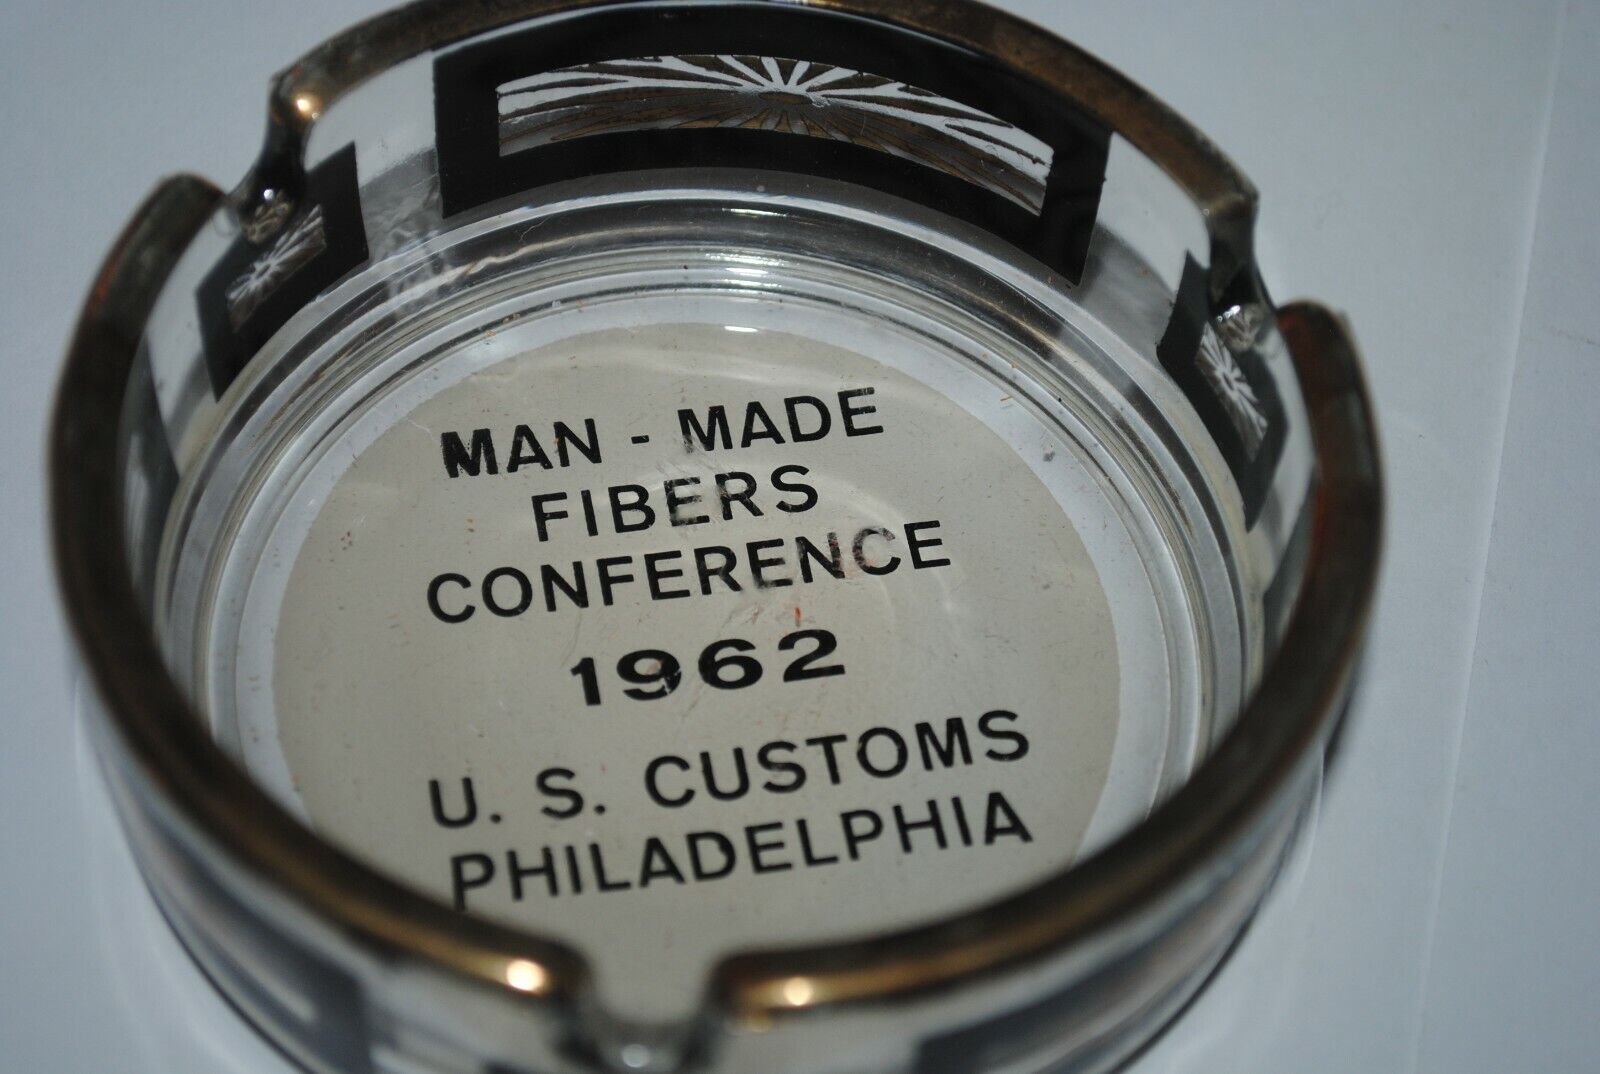 1962 U.S. Customs glass ashtray, Man-Made Fibers Conference, Philadelphia, EX